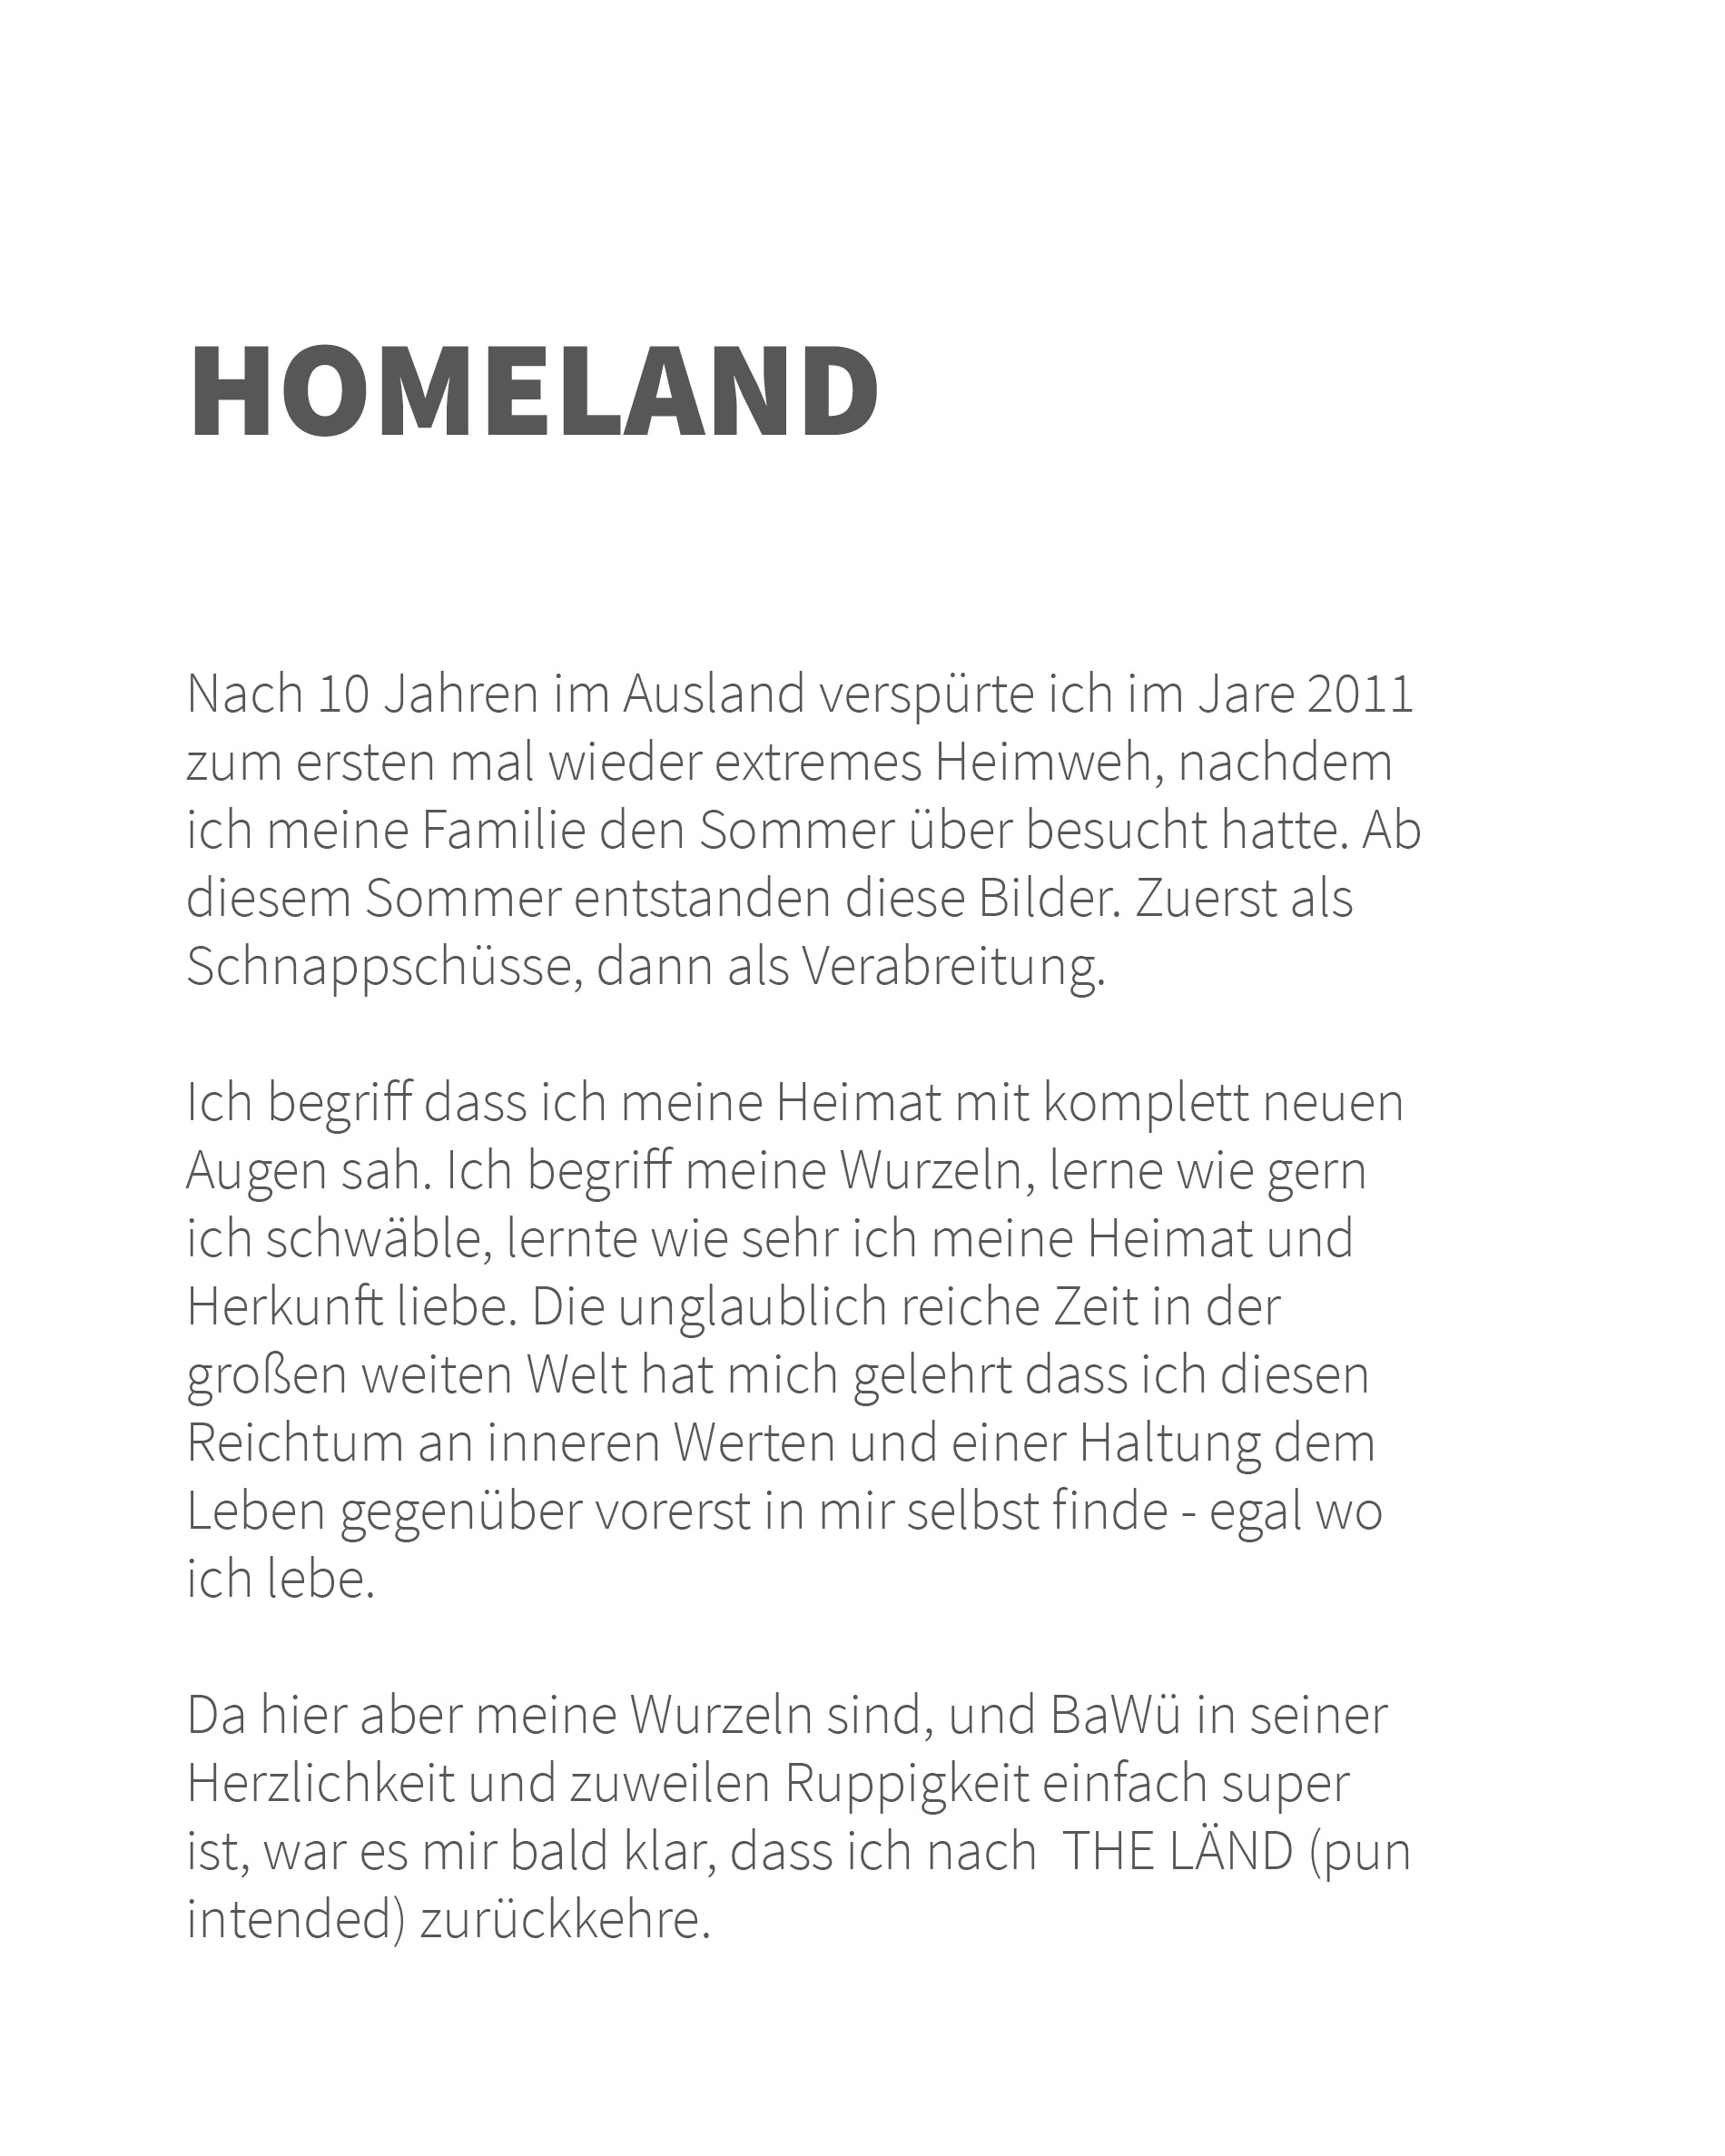 homeland_3